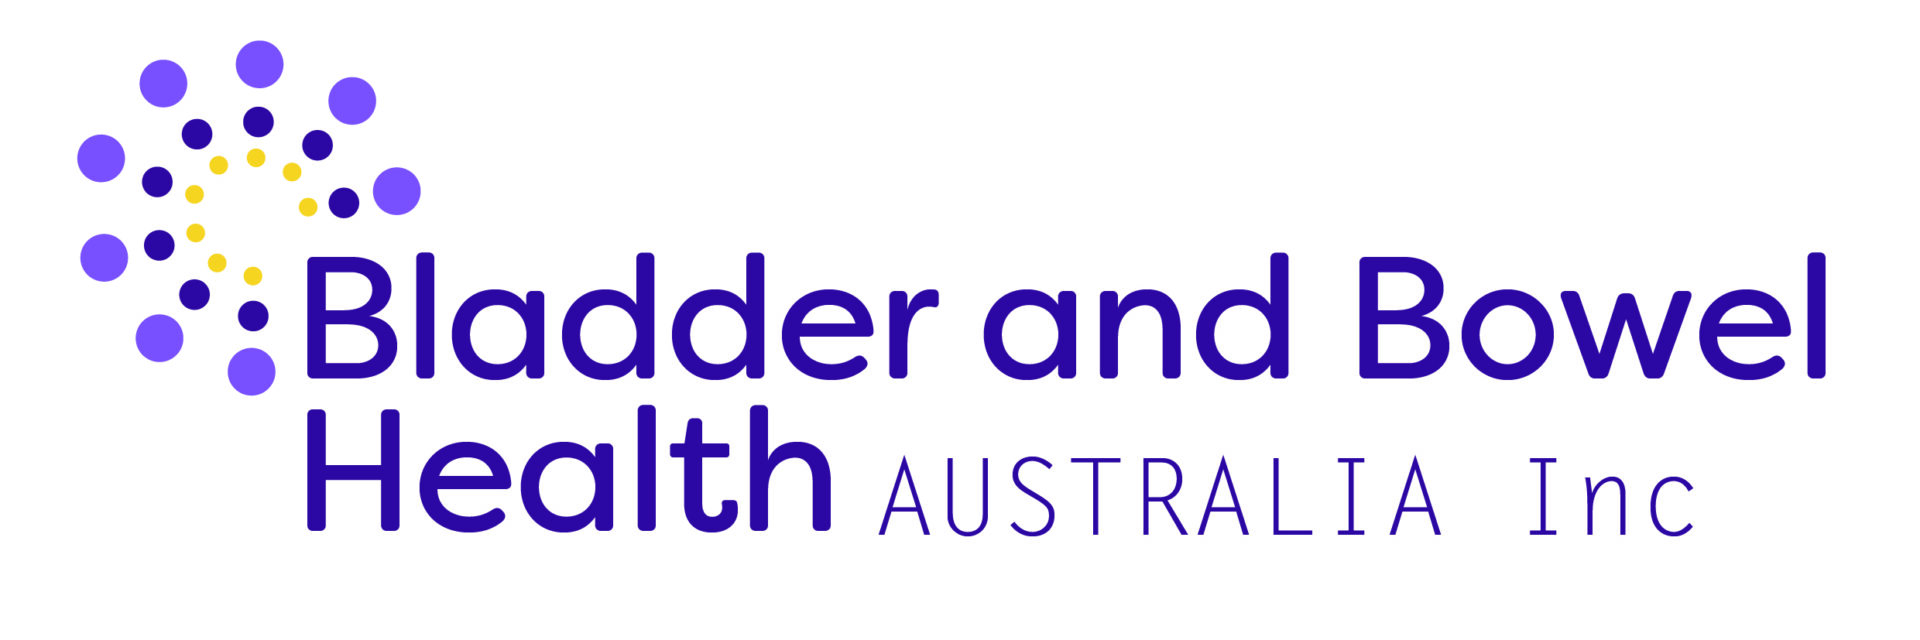 Bladder and Bowel Health Australia Inc